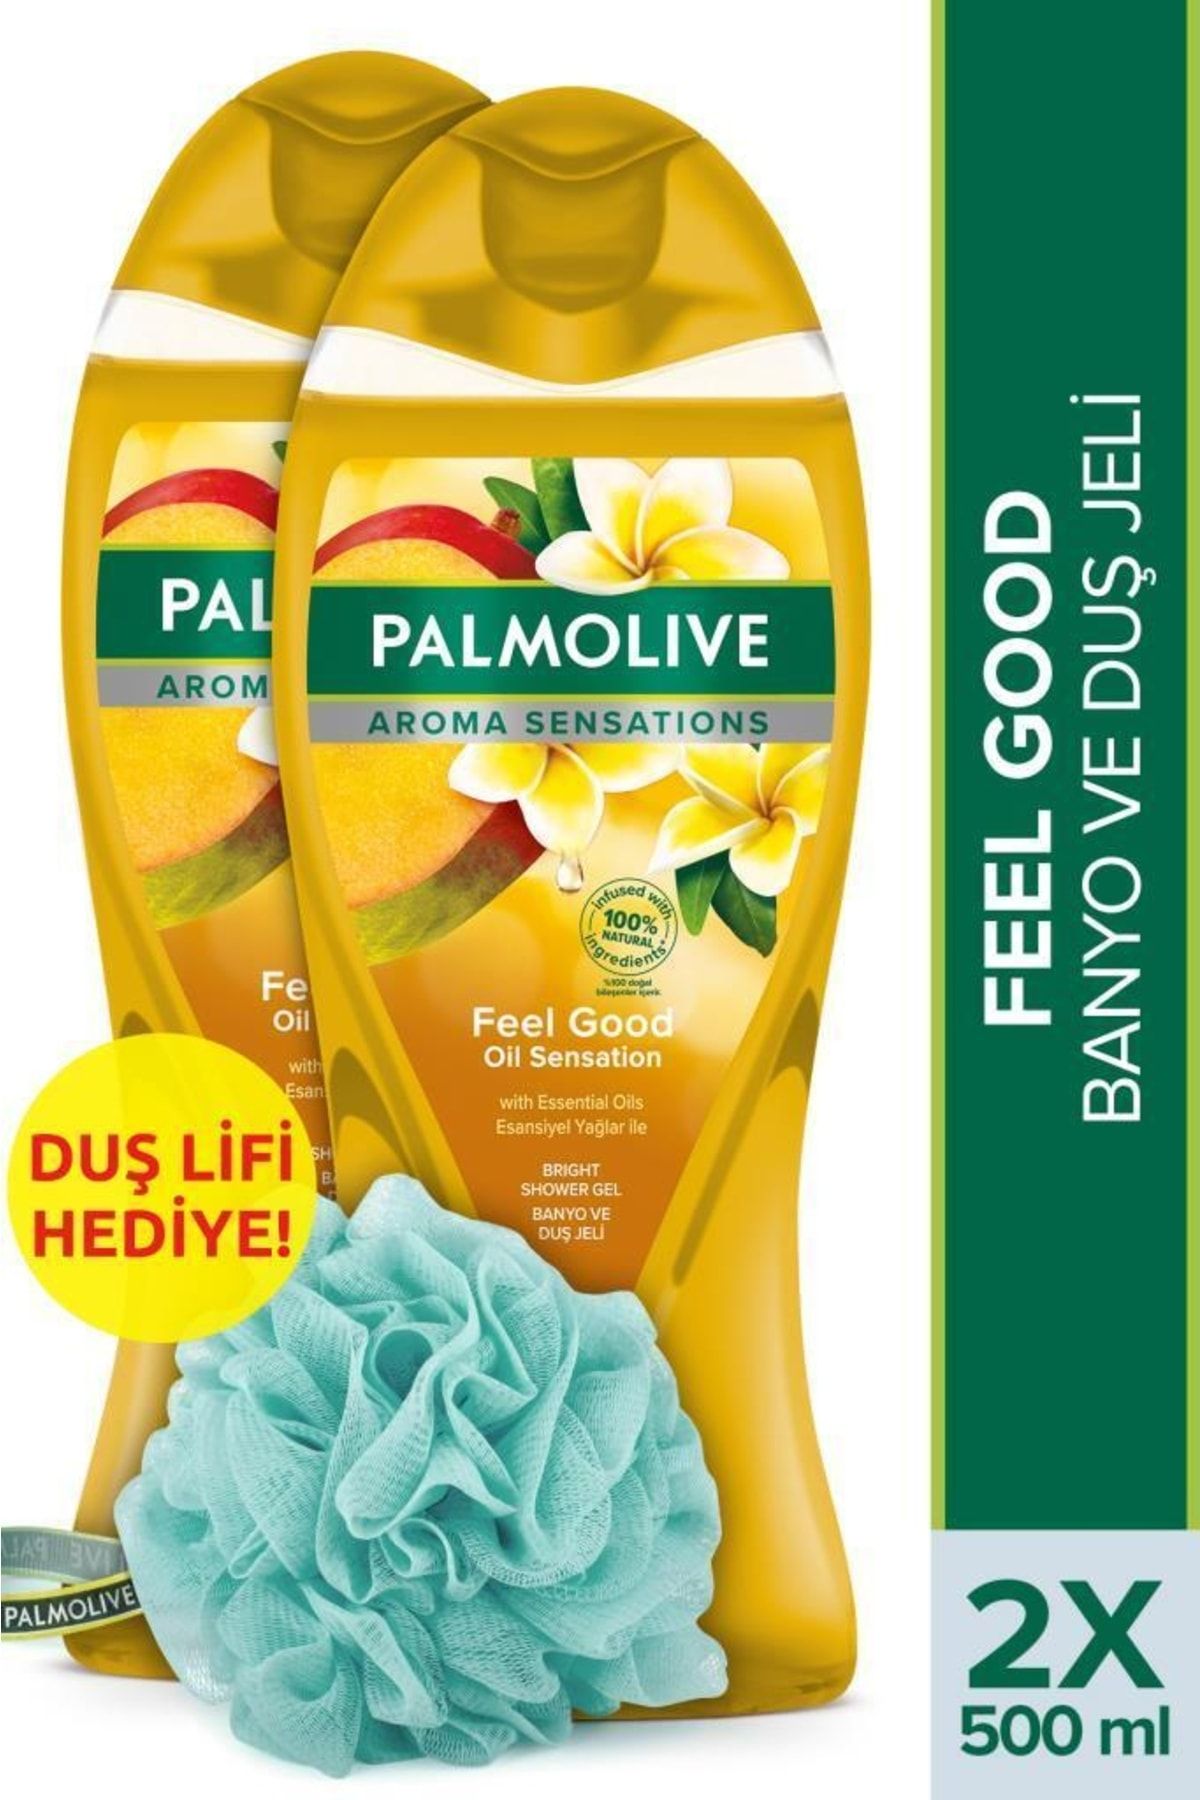 Palmolive Aroma Sensations Feel Good İpeksi Banyo ve Duş Jeli 500 ml x 2 Adet + Duş Lifi Hediye